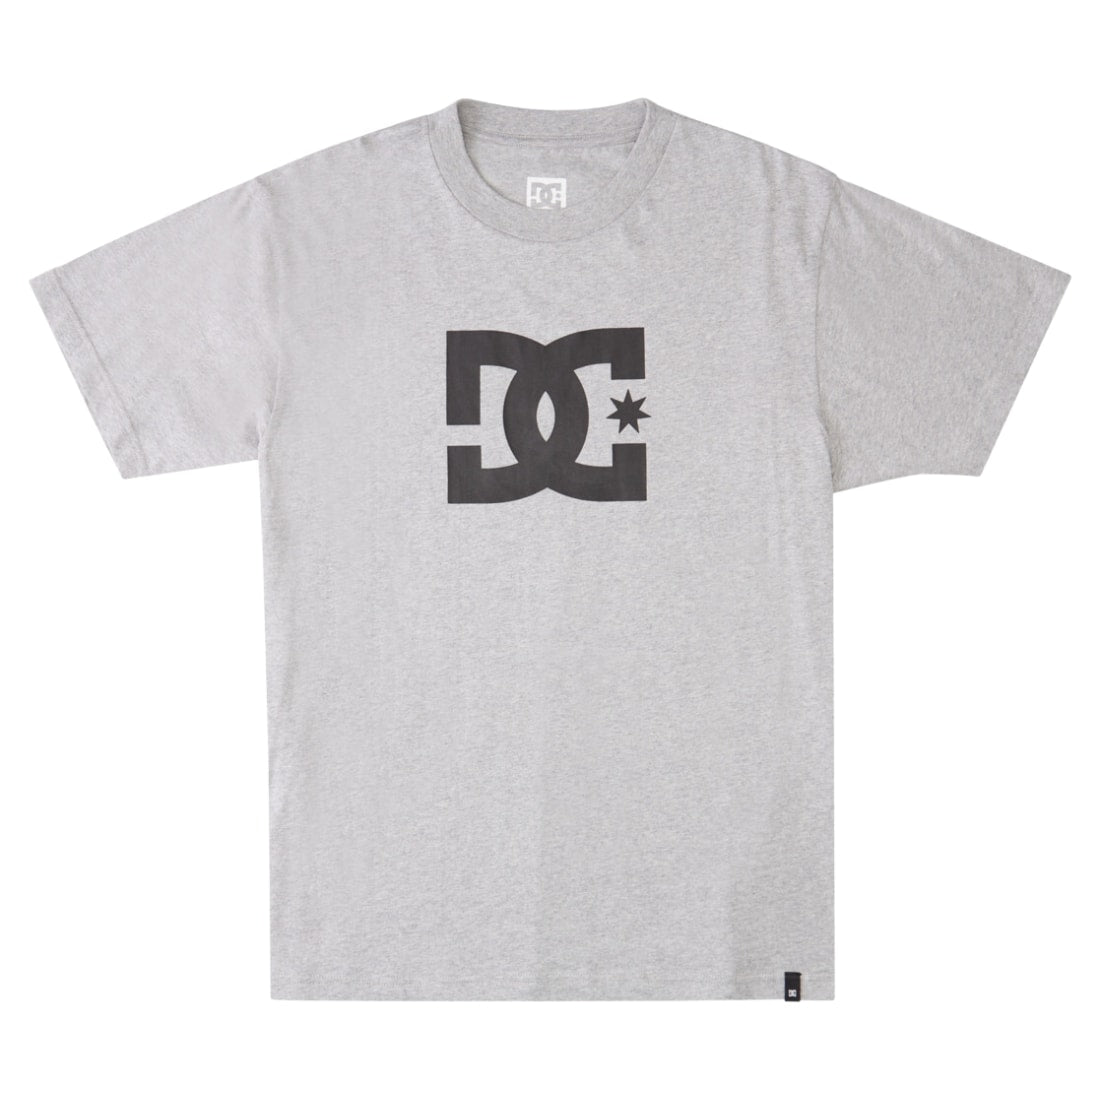 Dc Star T-Shirt - Heather Grey - Mens Skate Brand T-Shirt by DC